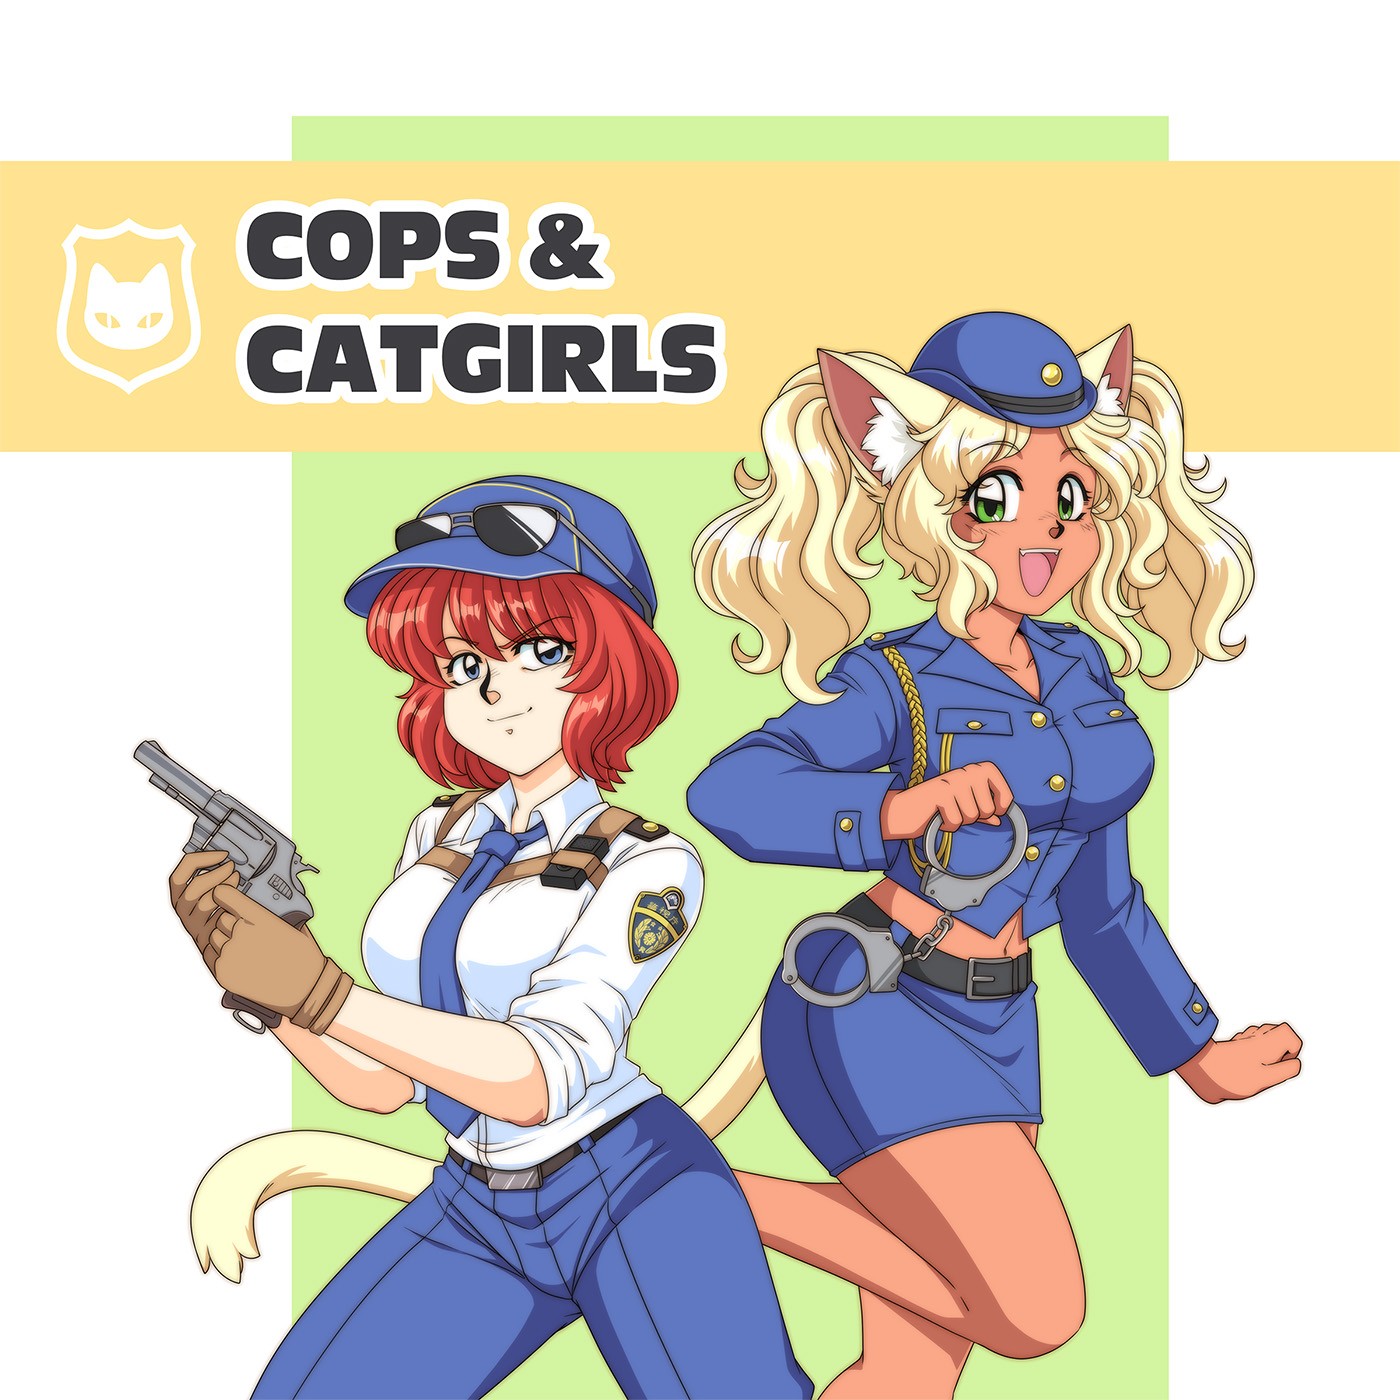 Cops & Catgirls